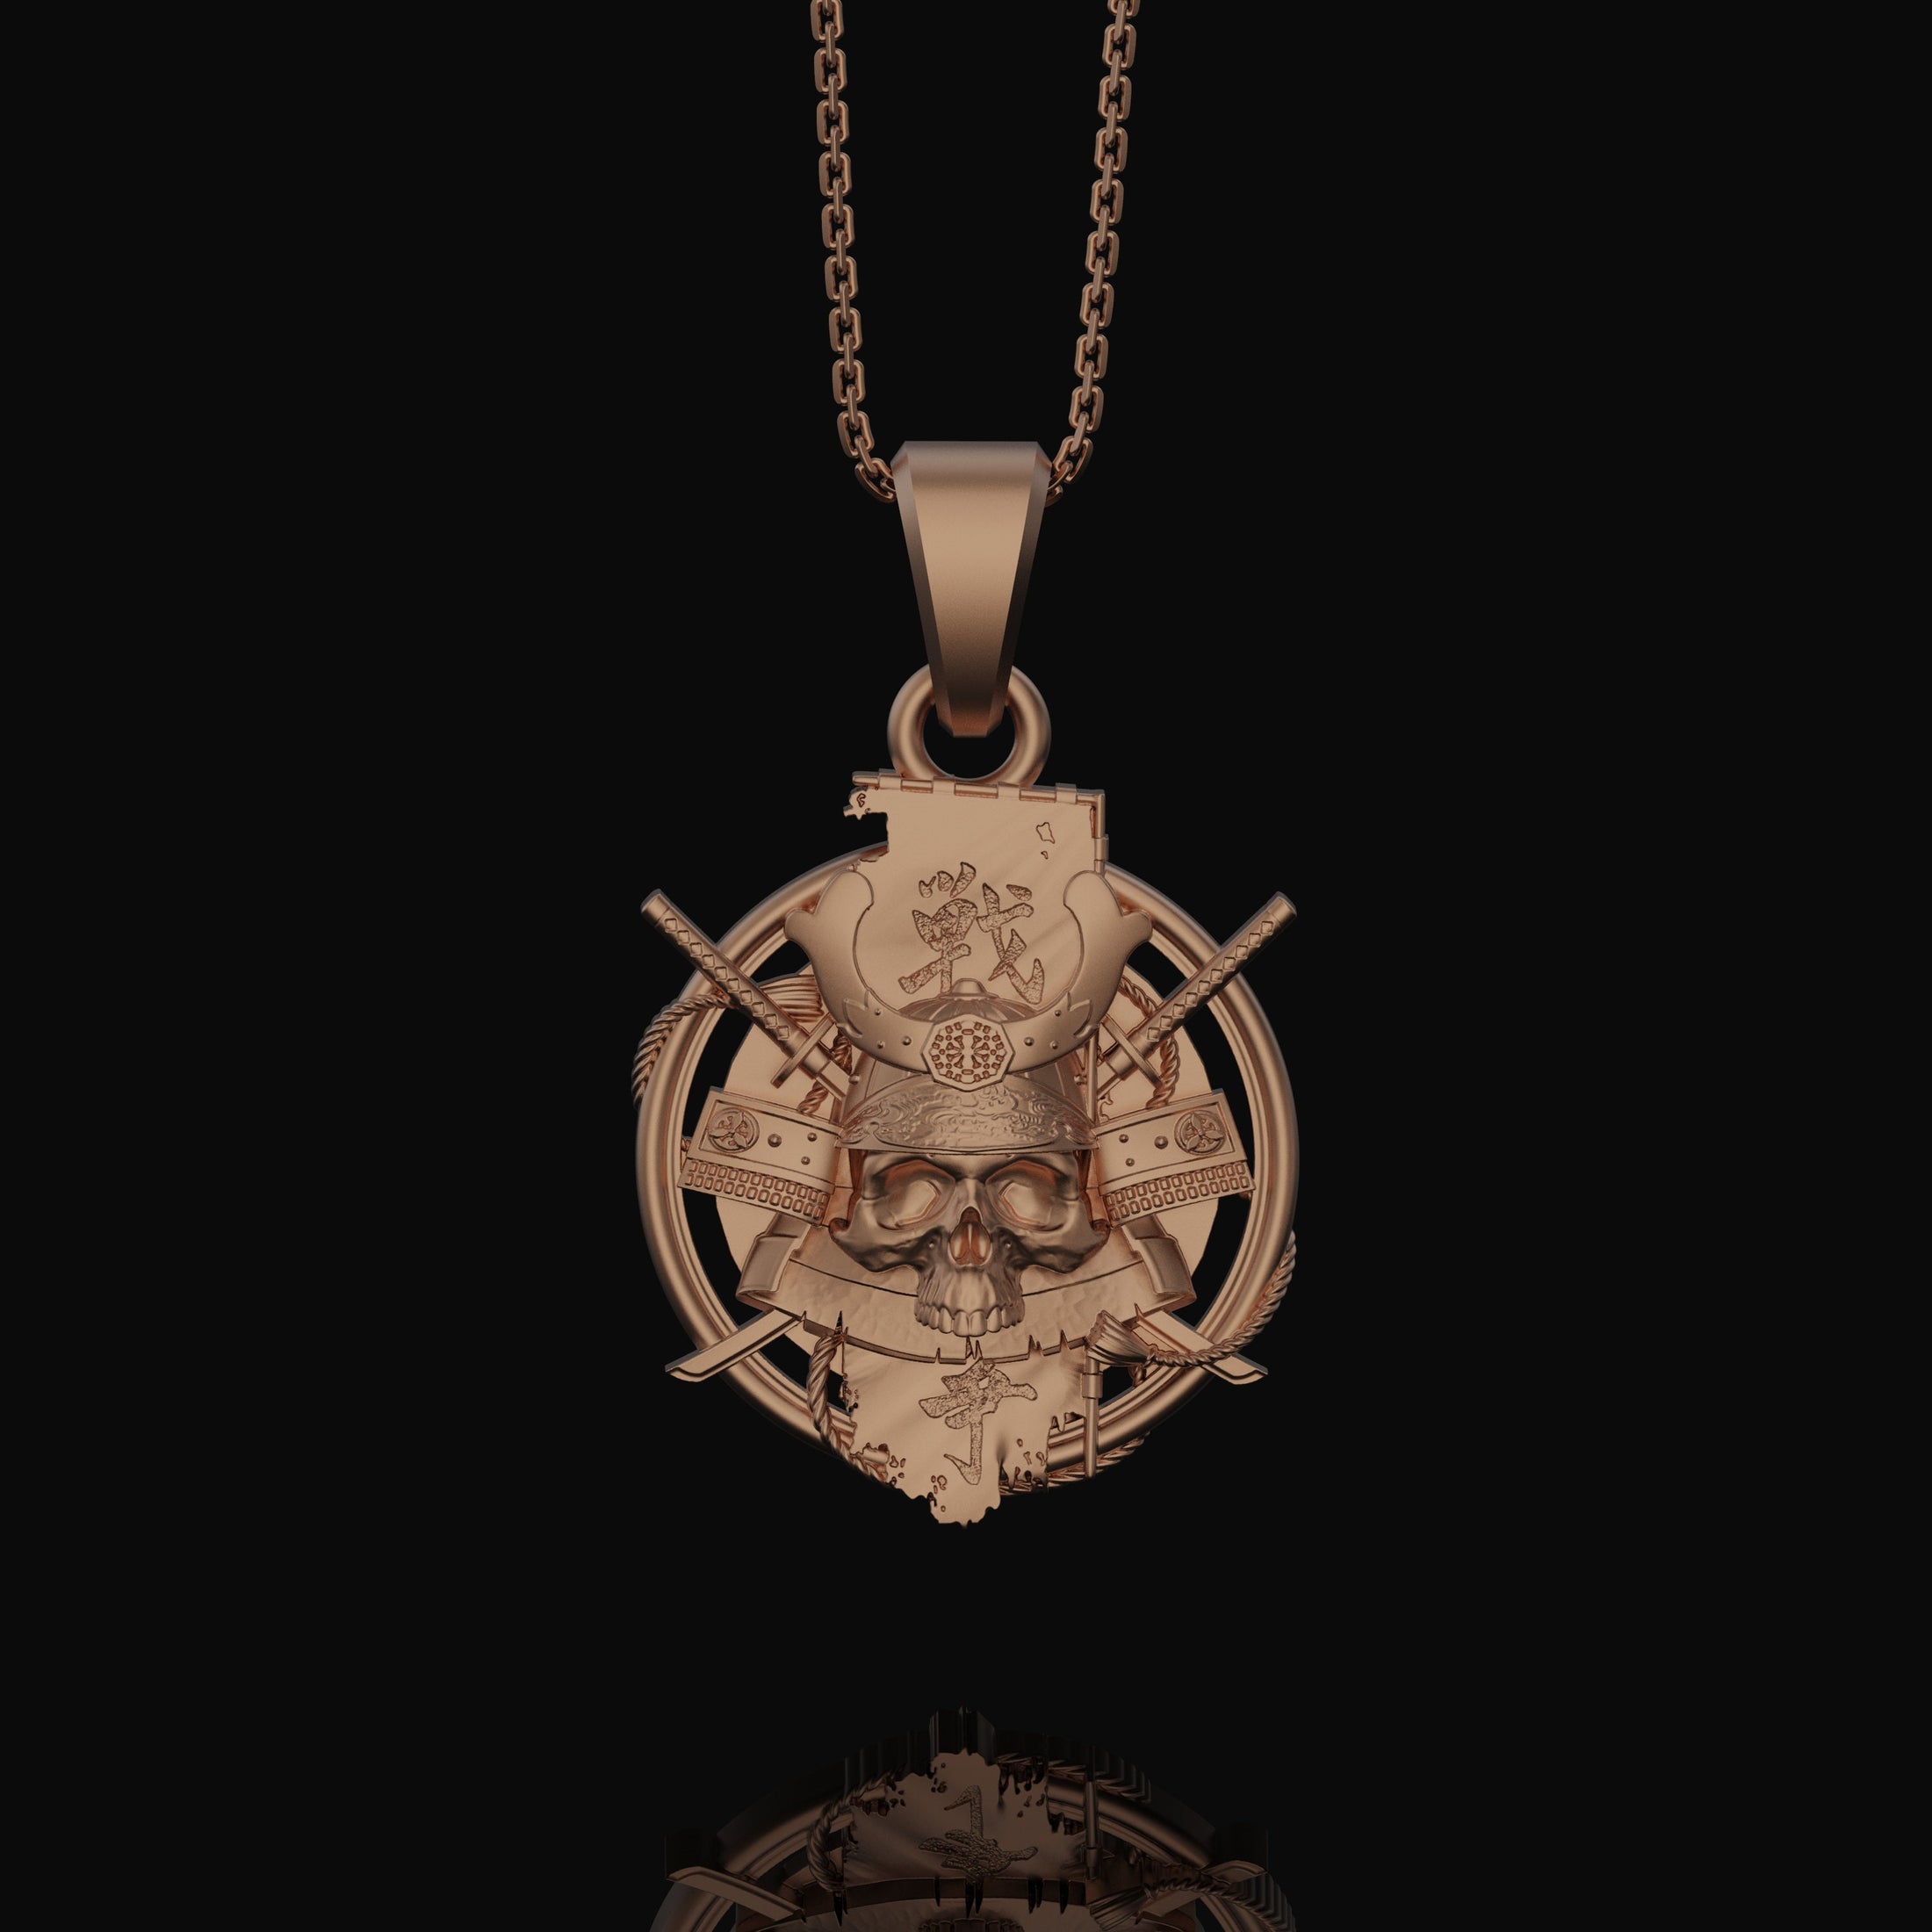 Silver Dead Samurai Skull Necklace - Shogun Skull Pendant, Japanese Warrior Jewelry, Edgy Cultural Gift